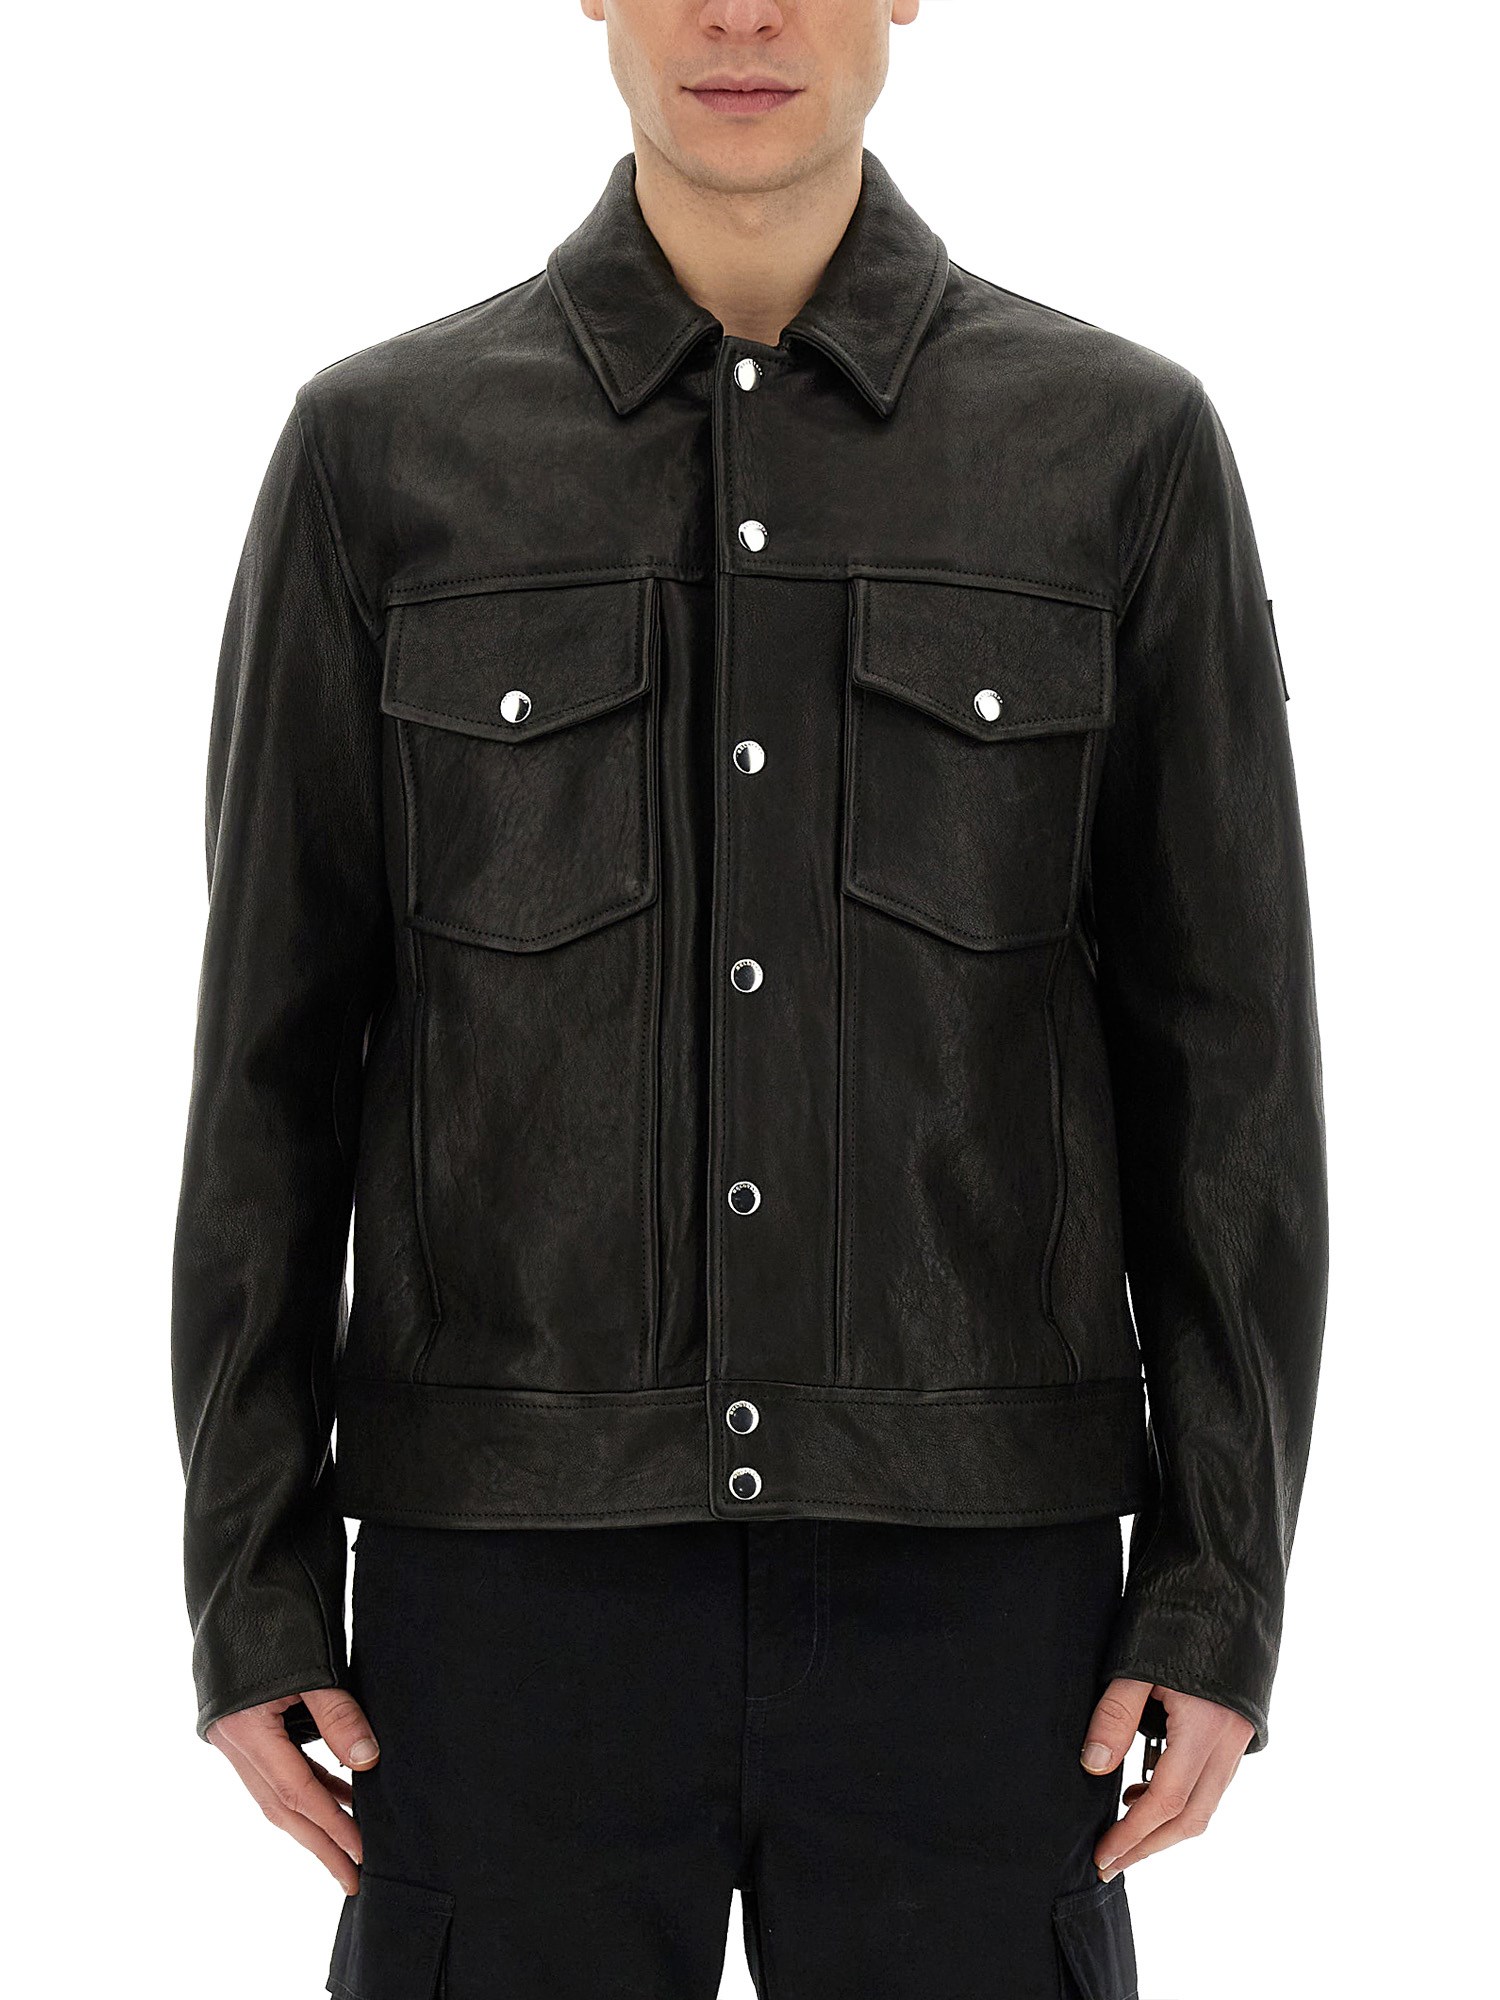 Belstaff belstaff leather jacket